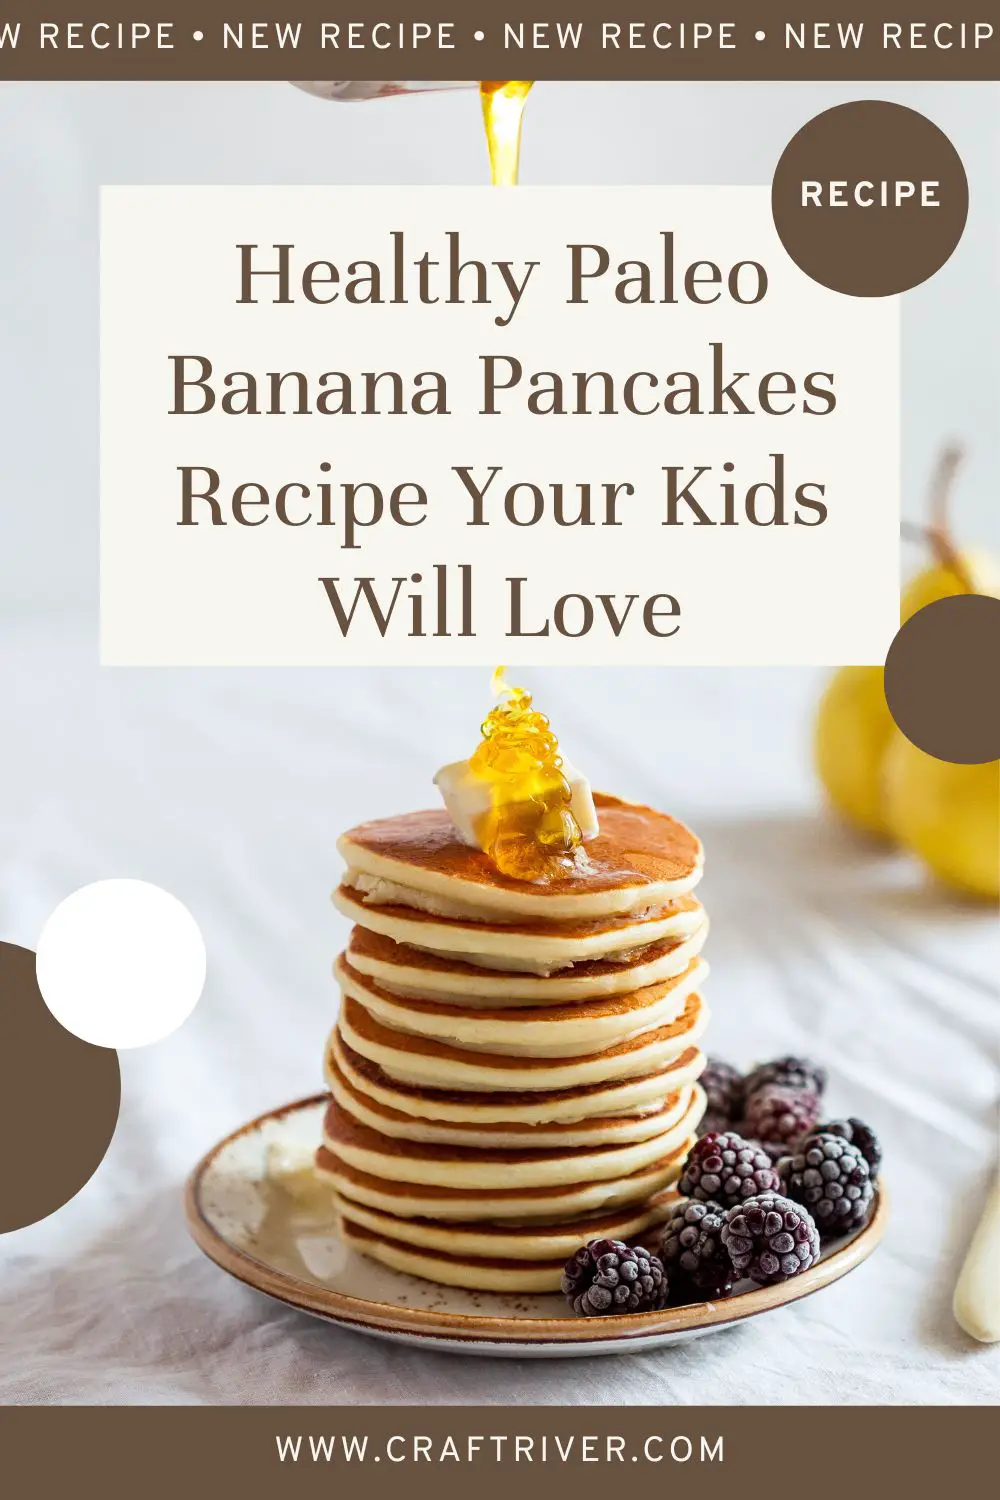 Healthy Paleo Banana Pancakes Recipe Your Kids Will Love